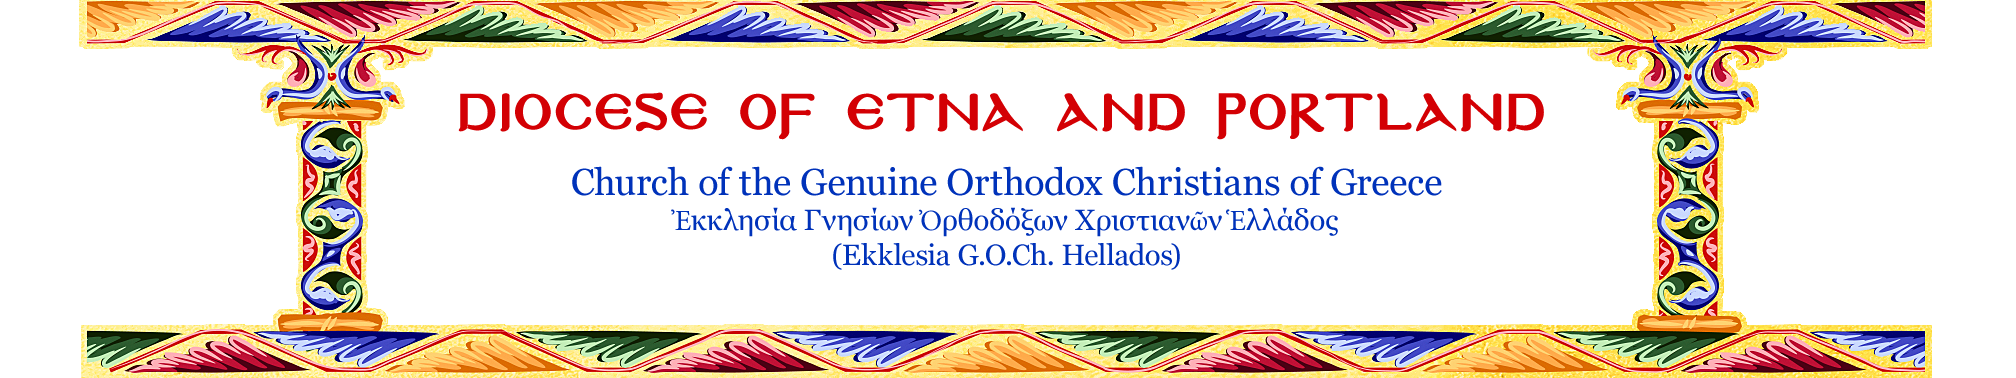 Diocese of Etna and Portland, Church of the Genuine Orthodox Christians of Greece, Ἐκκλησία Γνησίων Ὀρθοδόξων Χριστιανῶν Ἑλλαδος (Ekklesia G.O.Ch. Hellados)